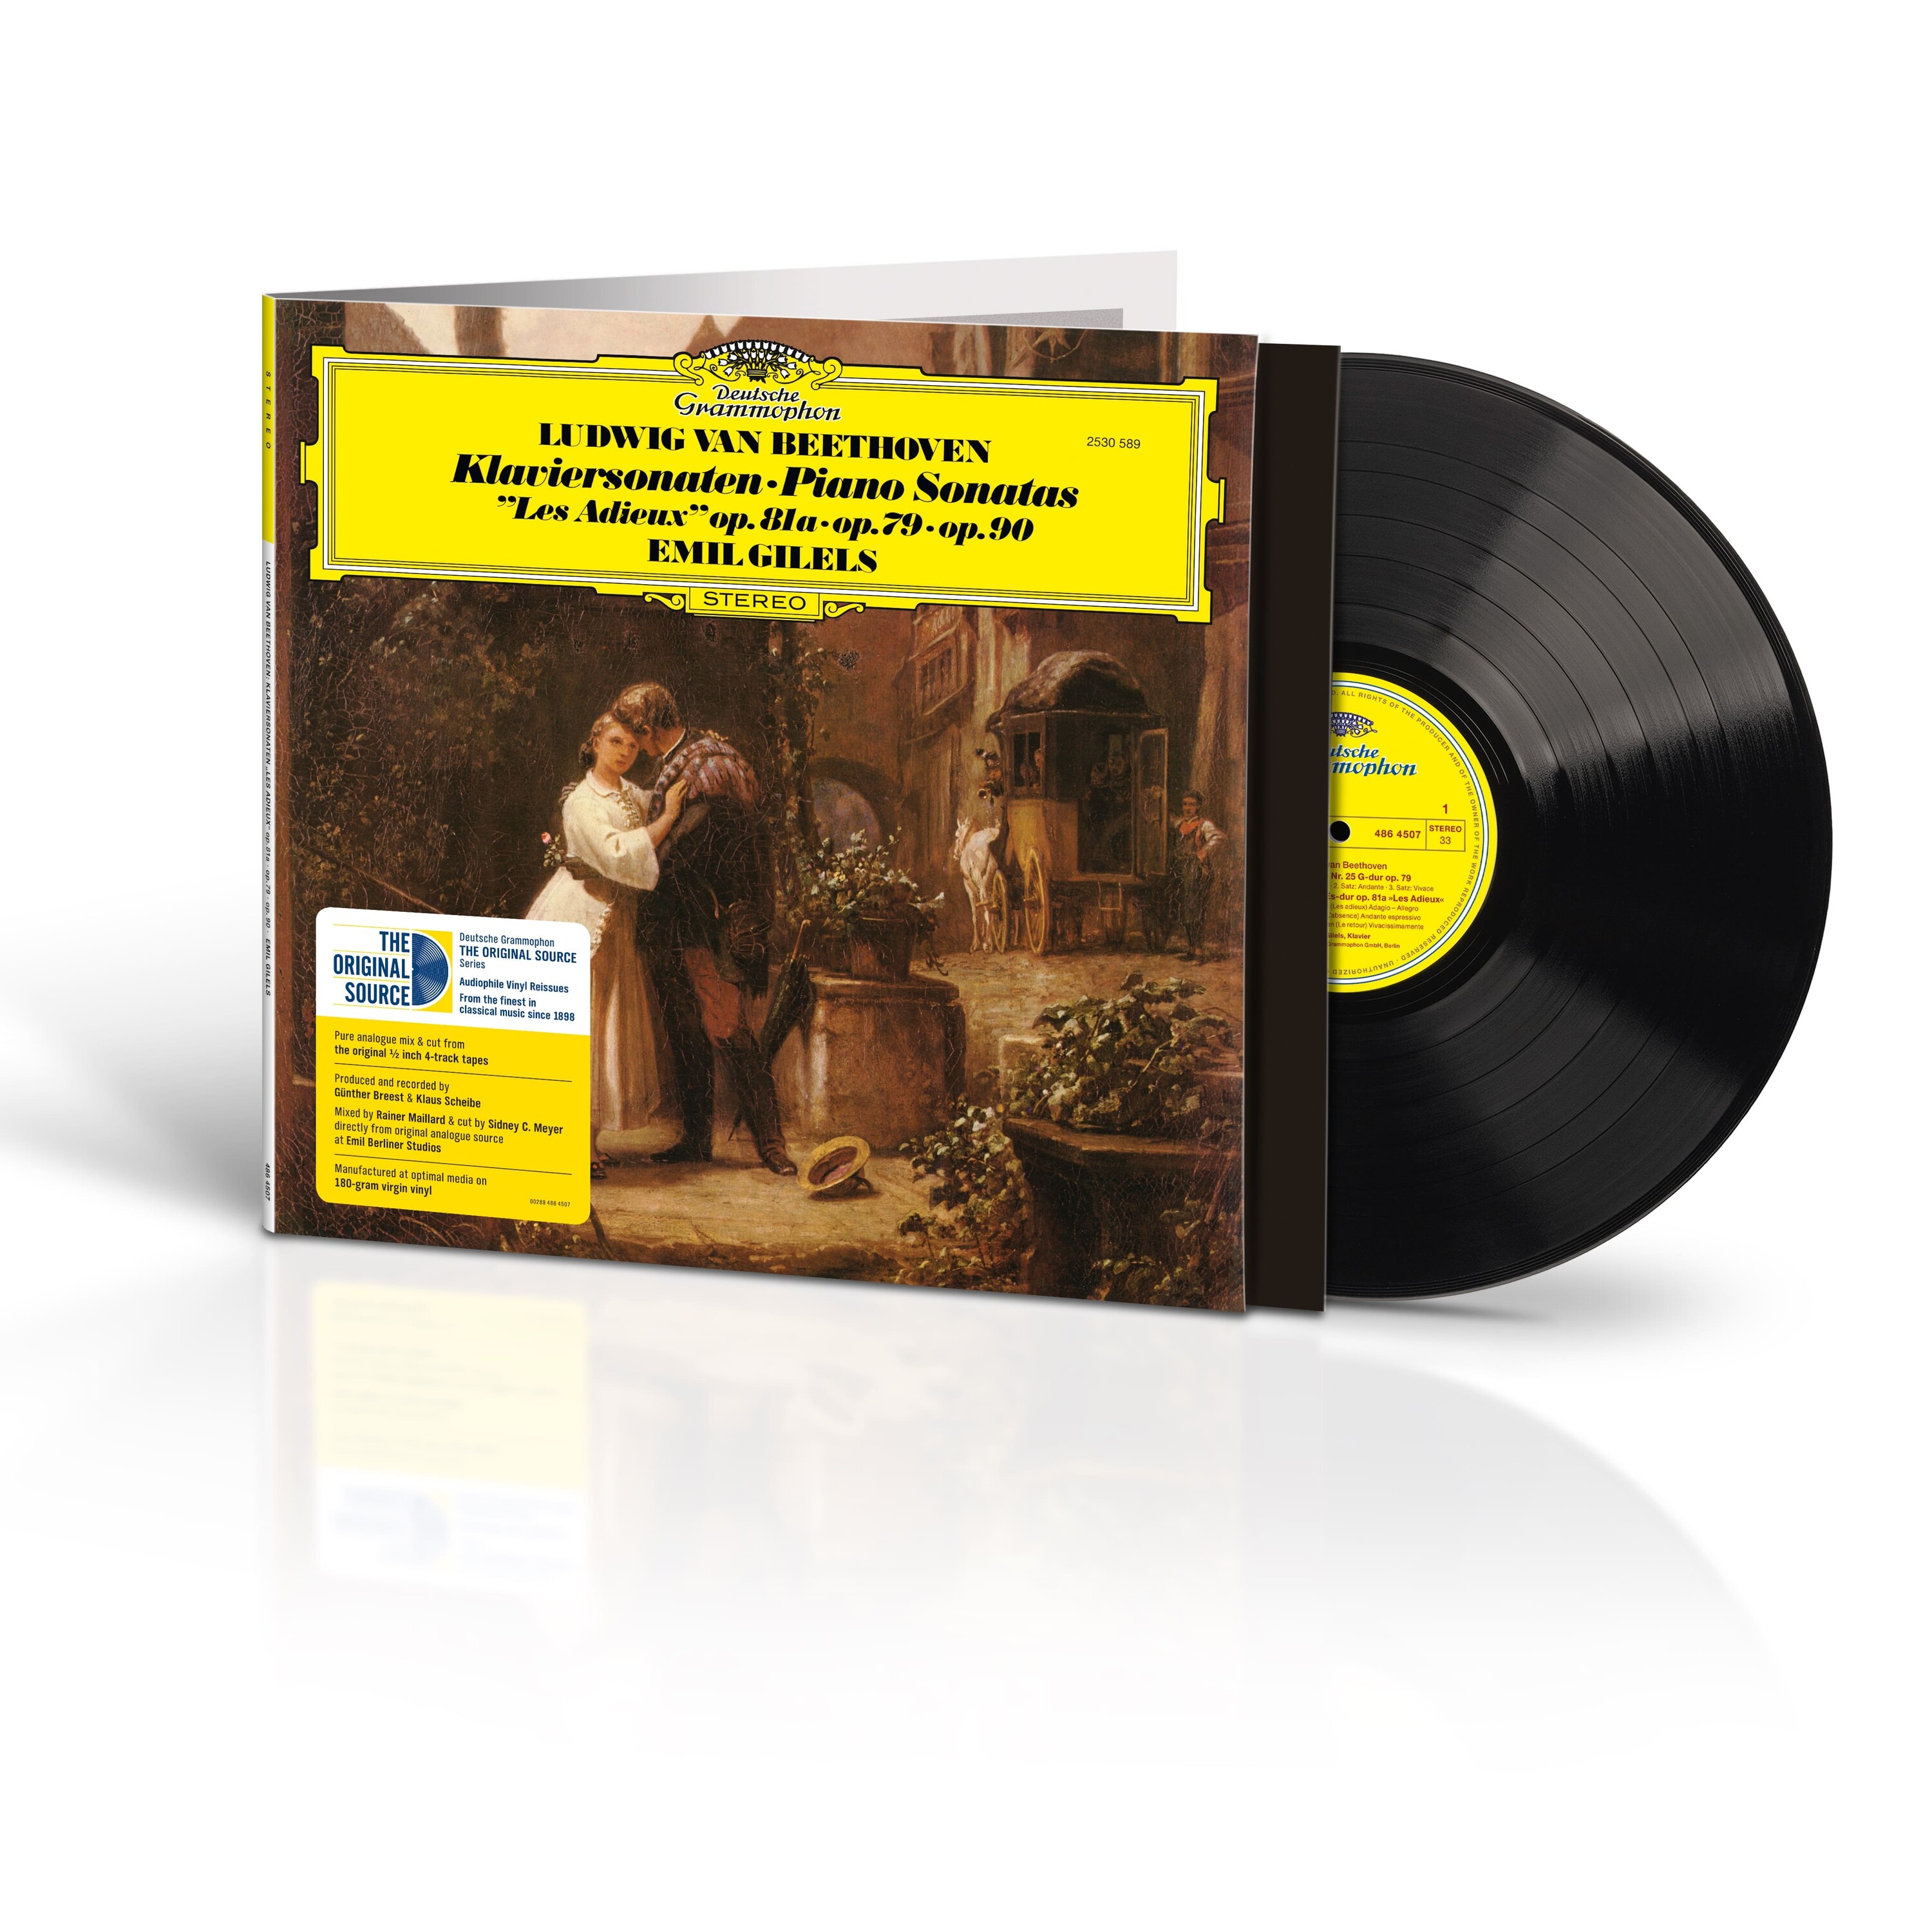 Beethoven: Piano Sonatas Nos. 25, 26 "Les Adieux" and 27  Emil Gilels  Dg Original Source